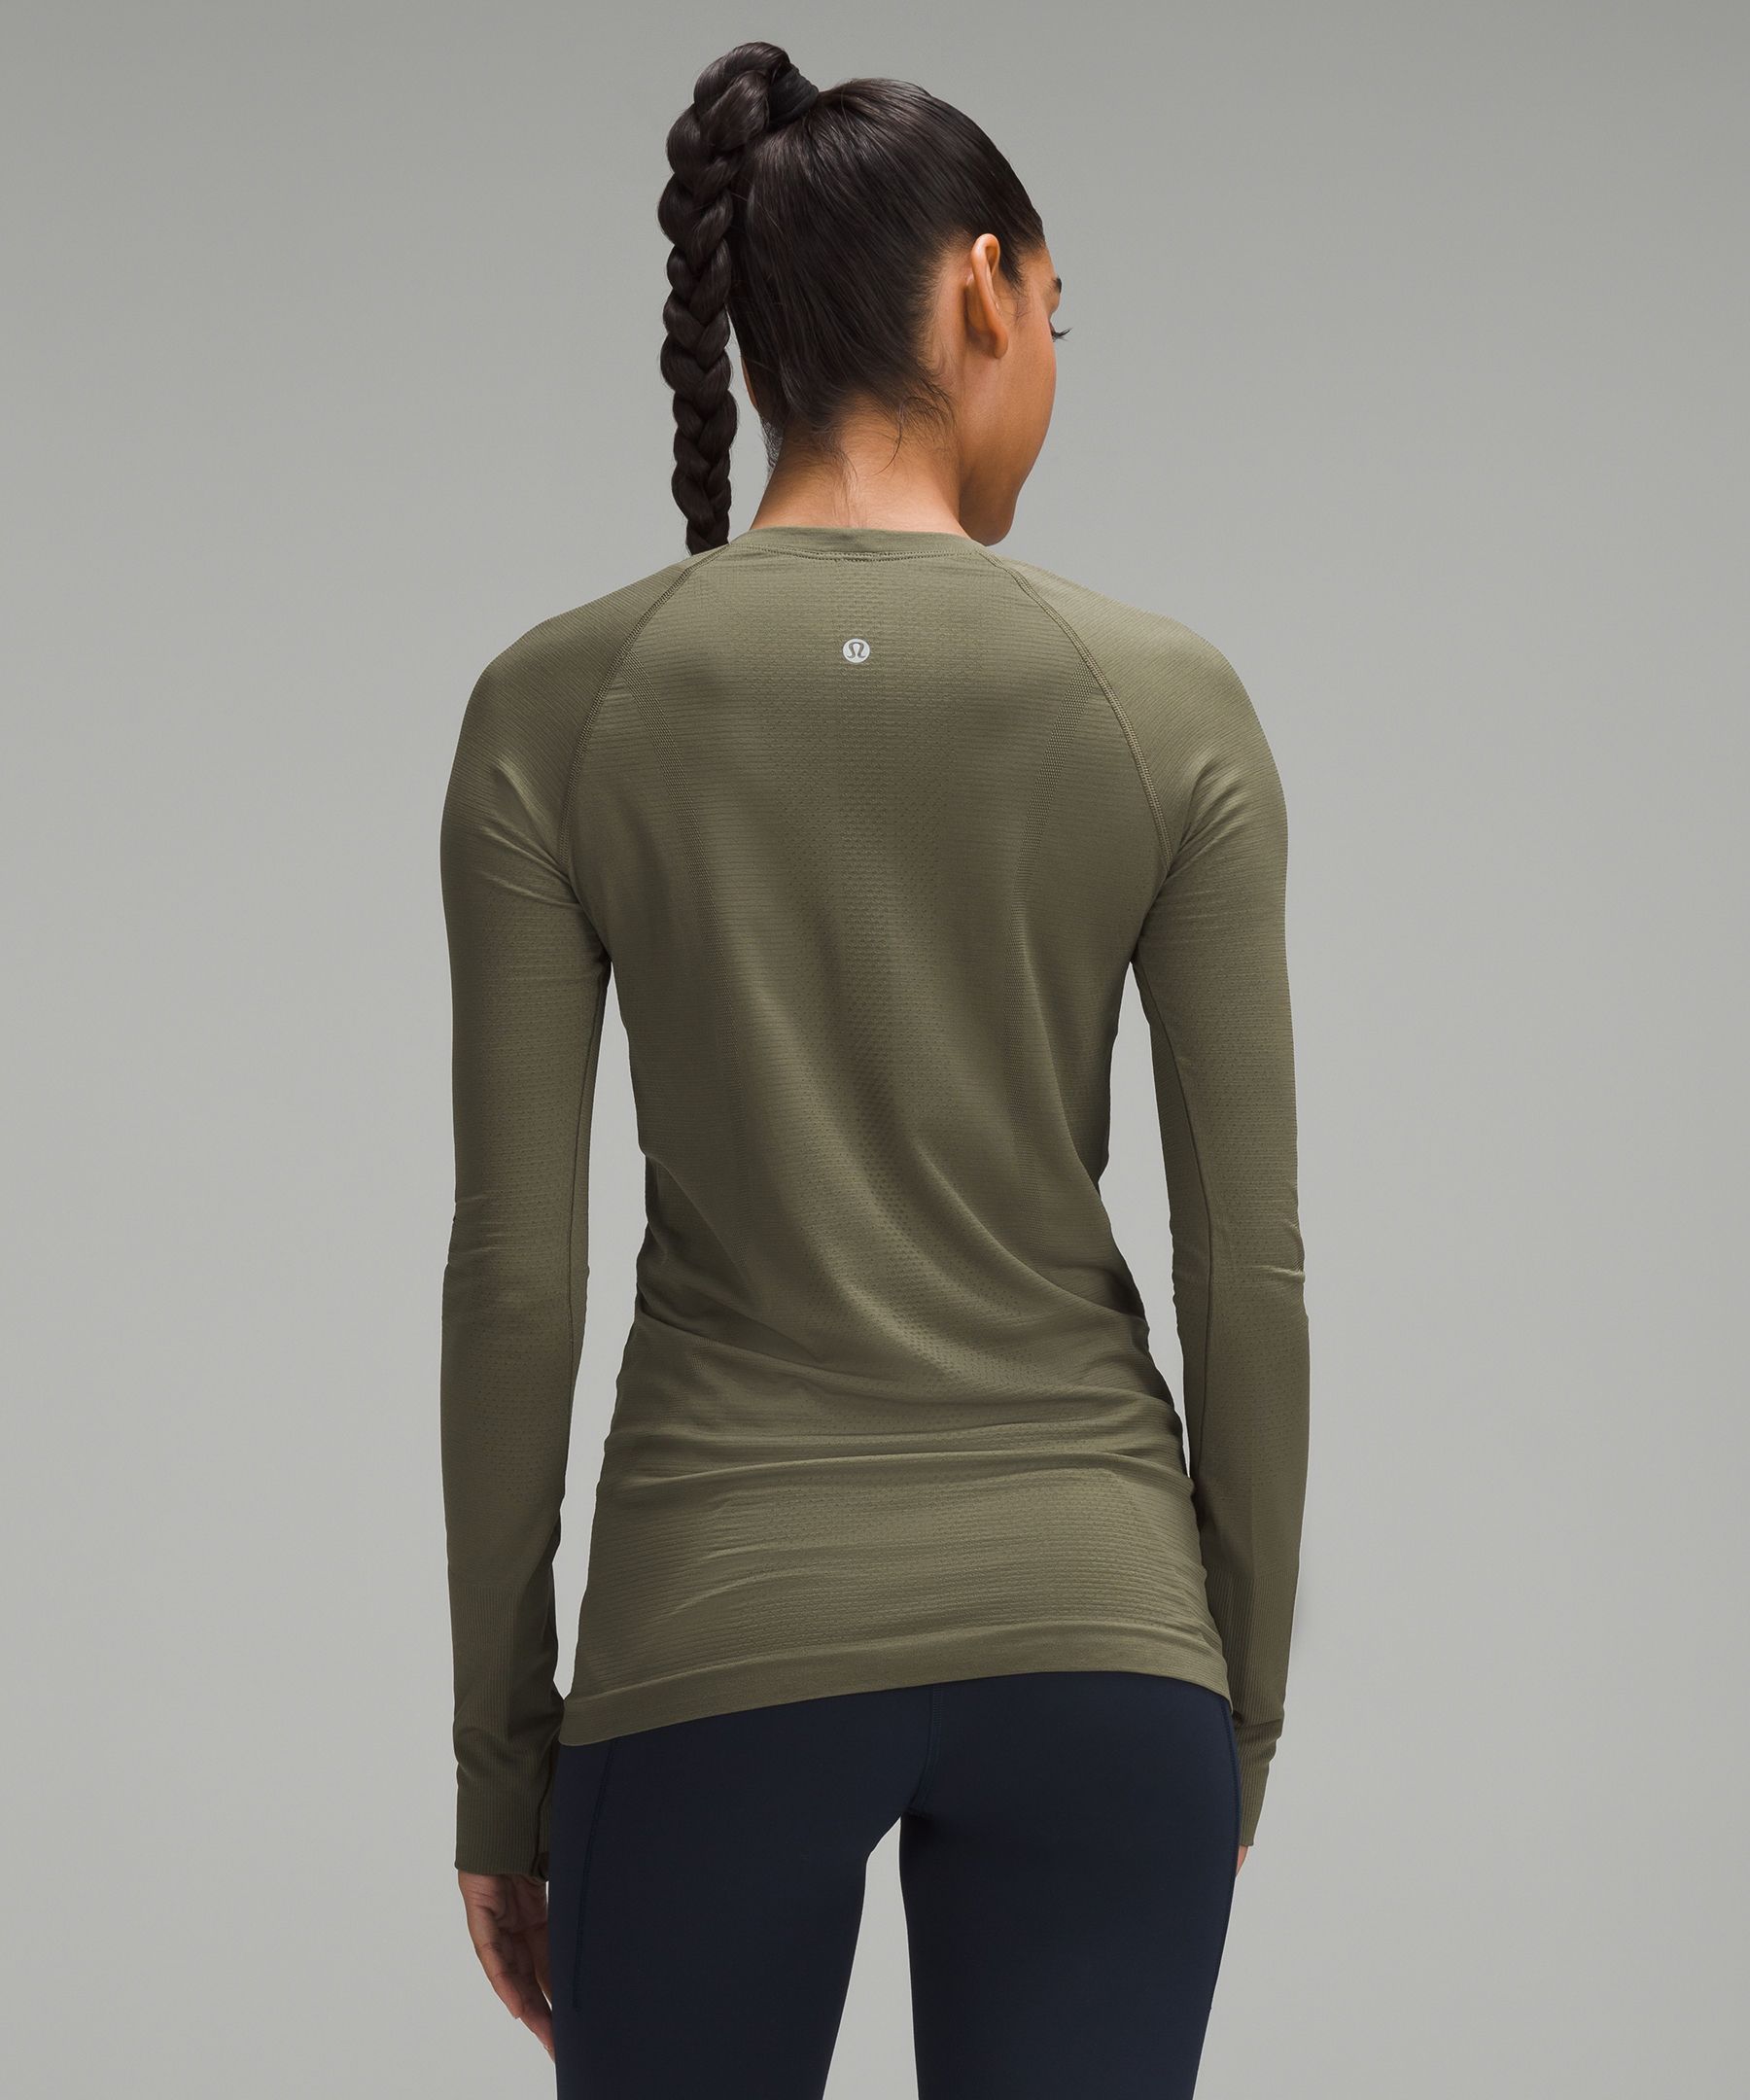 Lululemon athletica Swiftly Tech Long-Sleeve Shirt 2.0